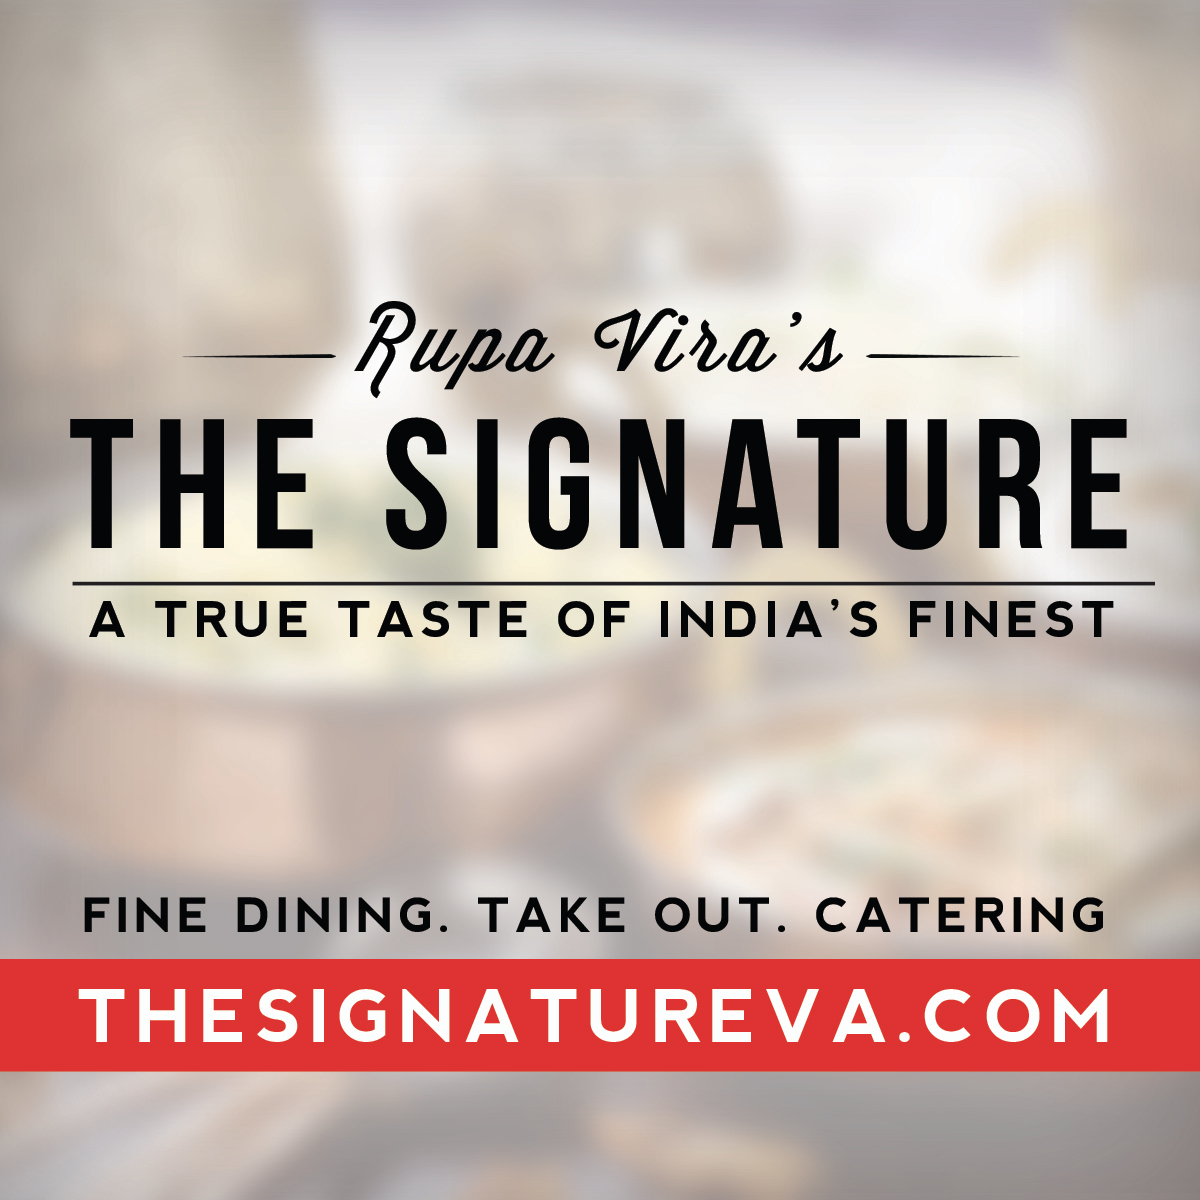 Rupa Vira's The Signature - Finest Indian Cuisine - Ashburn, VA 20147 - (571)442-8844 | ShowMeLocal.com